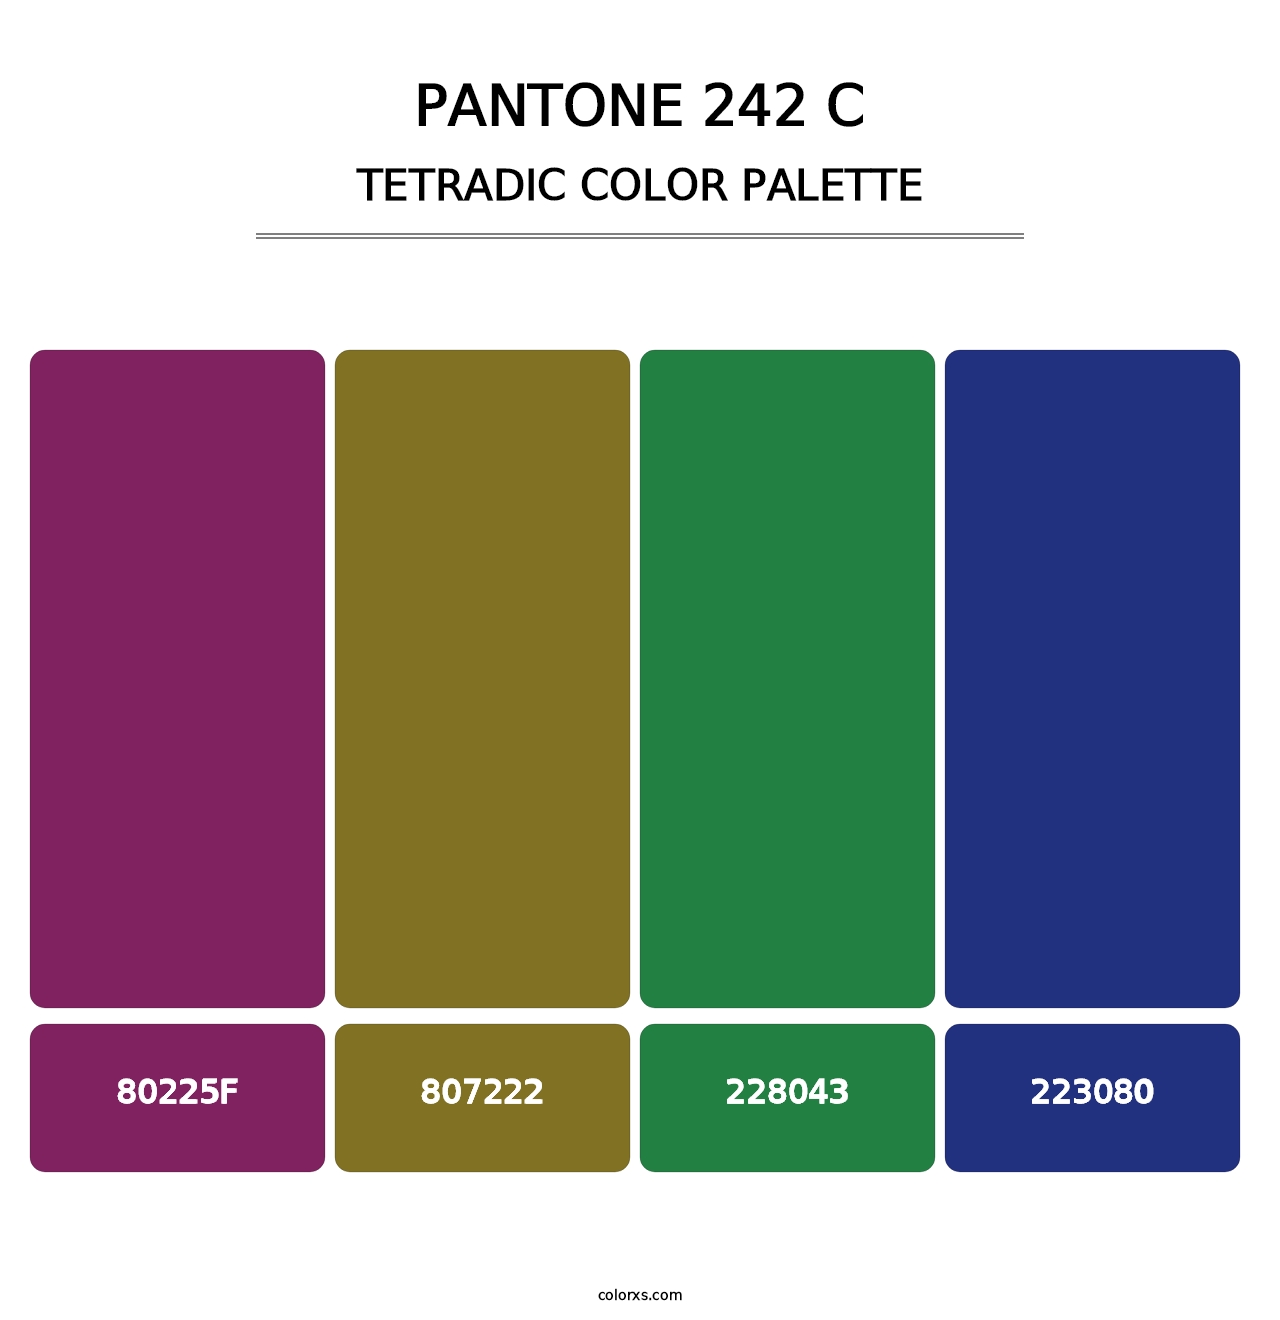 PANTONE 242 C - Tetradic Color Palette